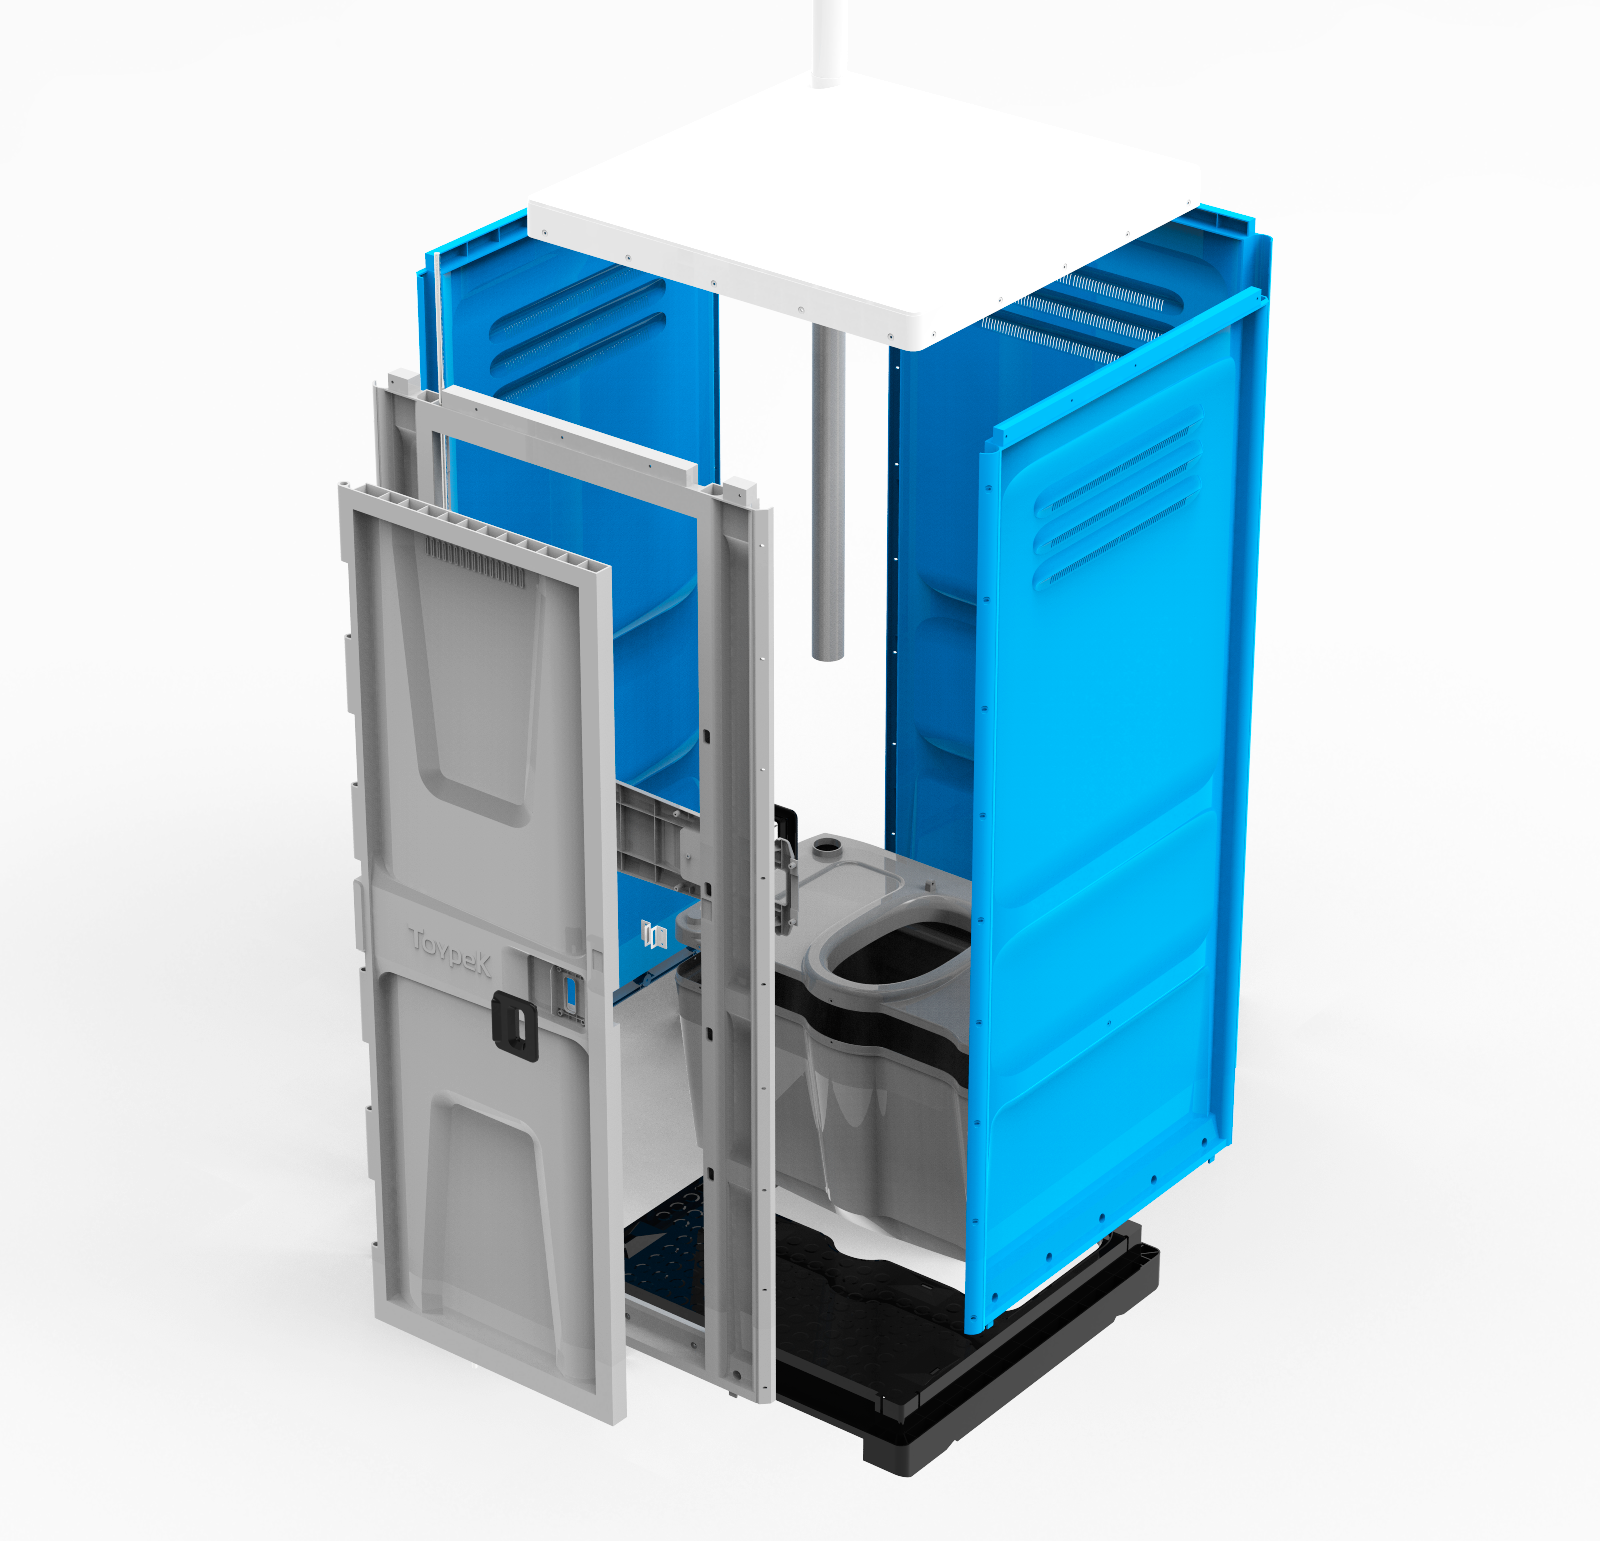 Туалетная кабина ToypeK синяя от ГК "Скарабей" для дачи - фотография № 2